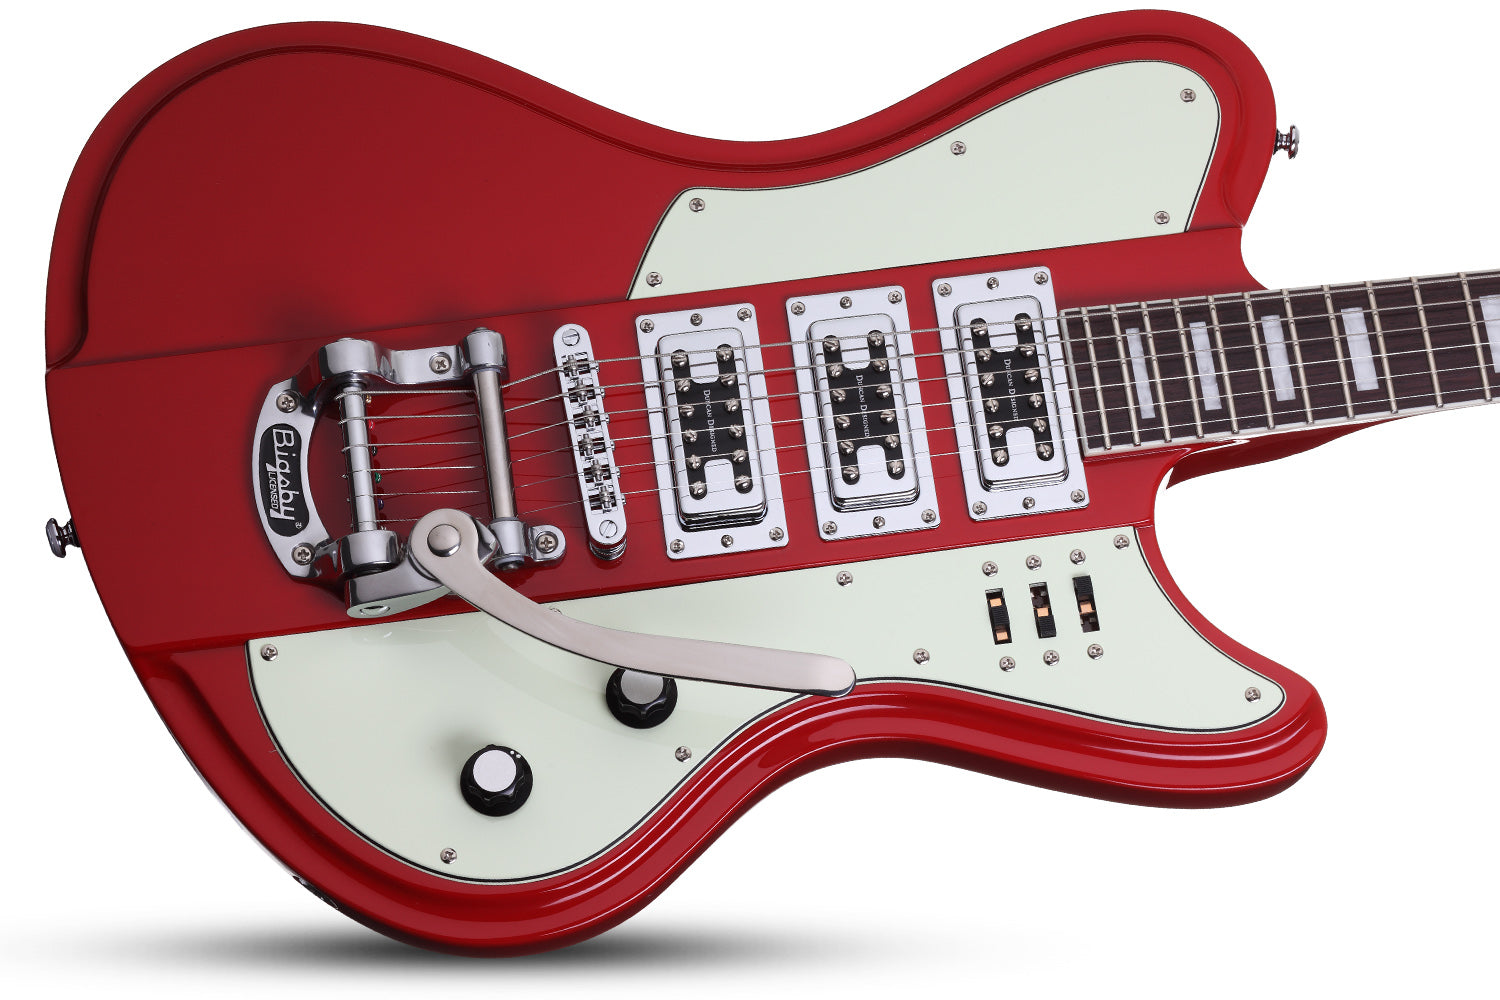 Schecter ULTRA-III-VRD Vintage Red Guitar w Duncan Designed FG 101 SCH-3154